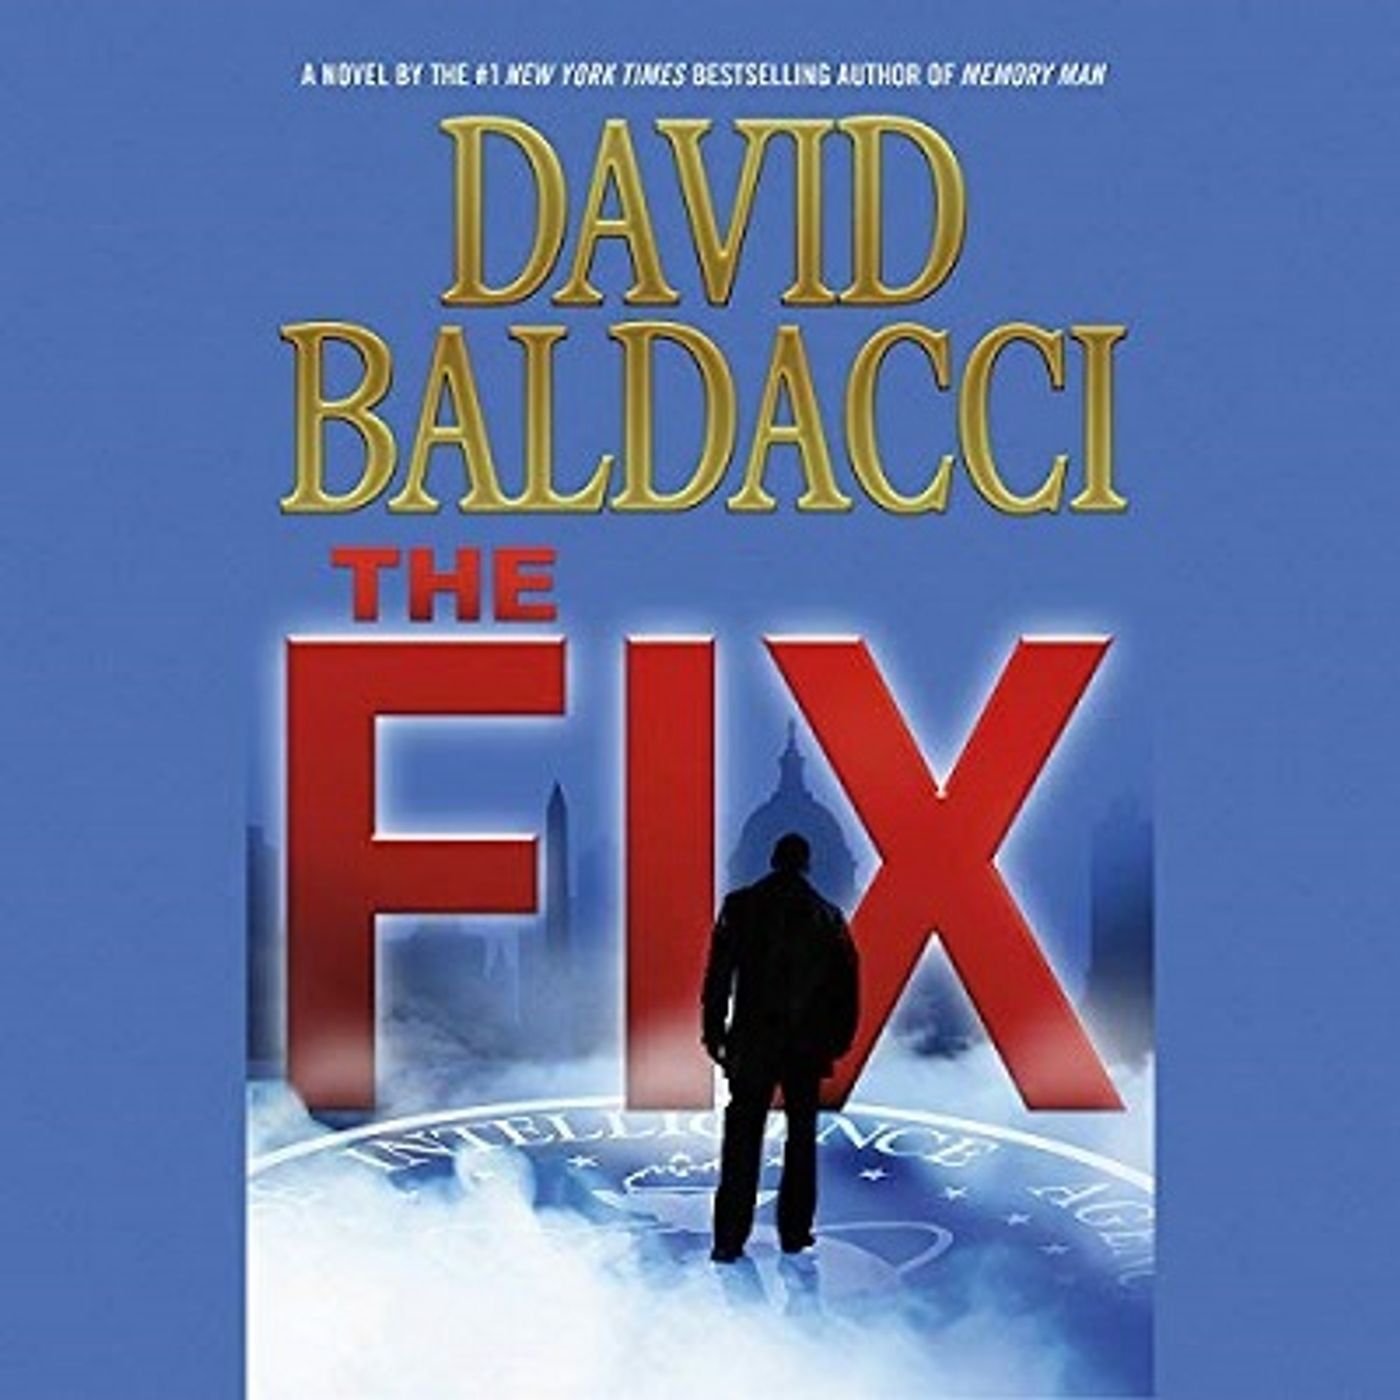 Ch 2 "The Fix" by David Baldacci